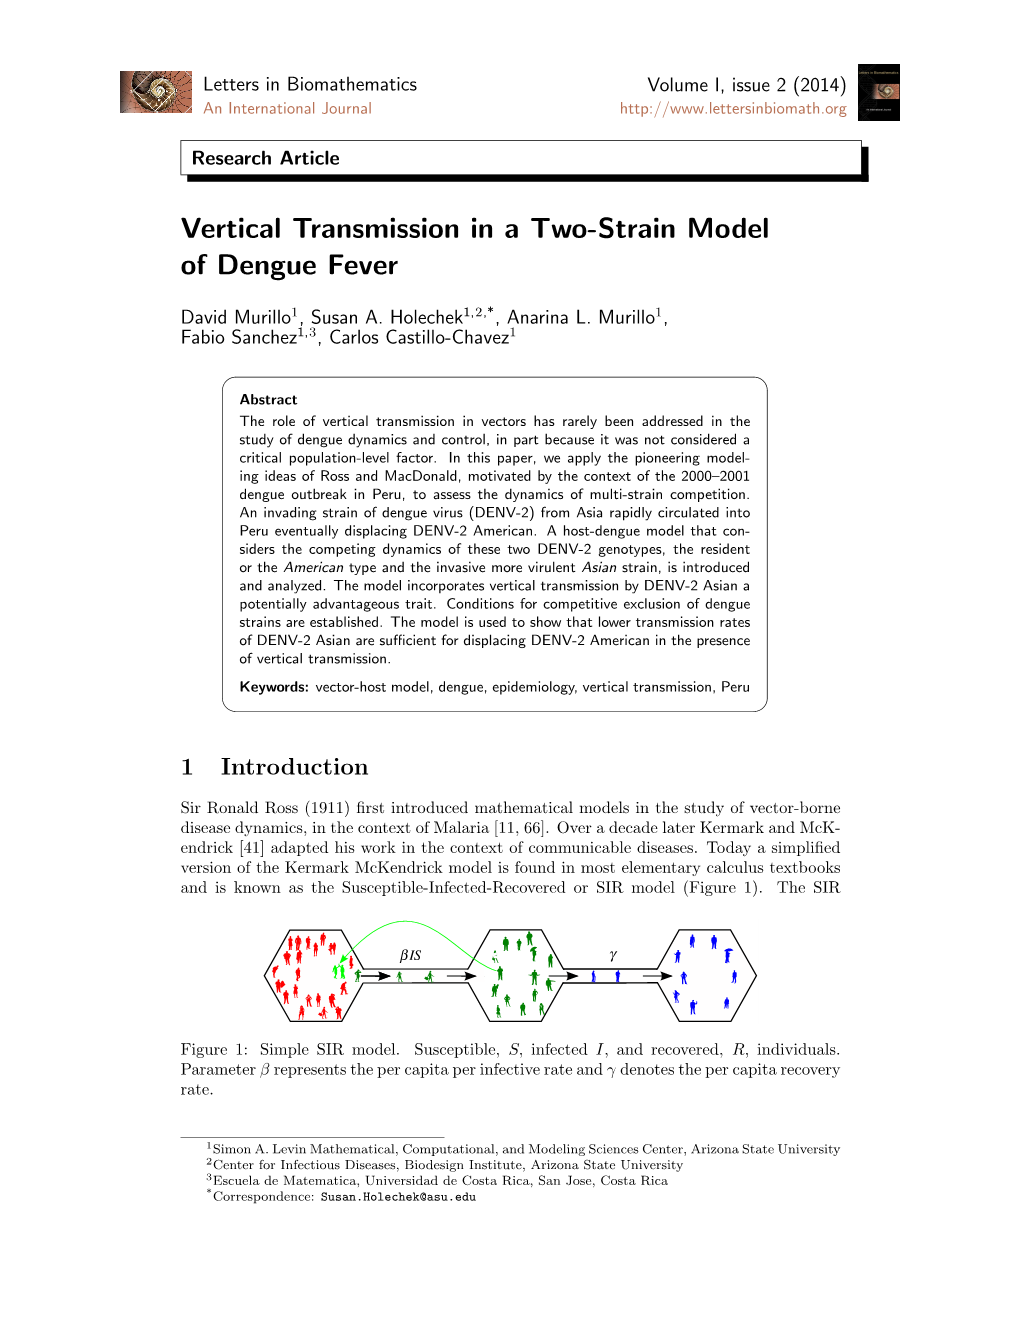 Vertical Transmission in a Two-Strain Model of Dengue Fever